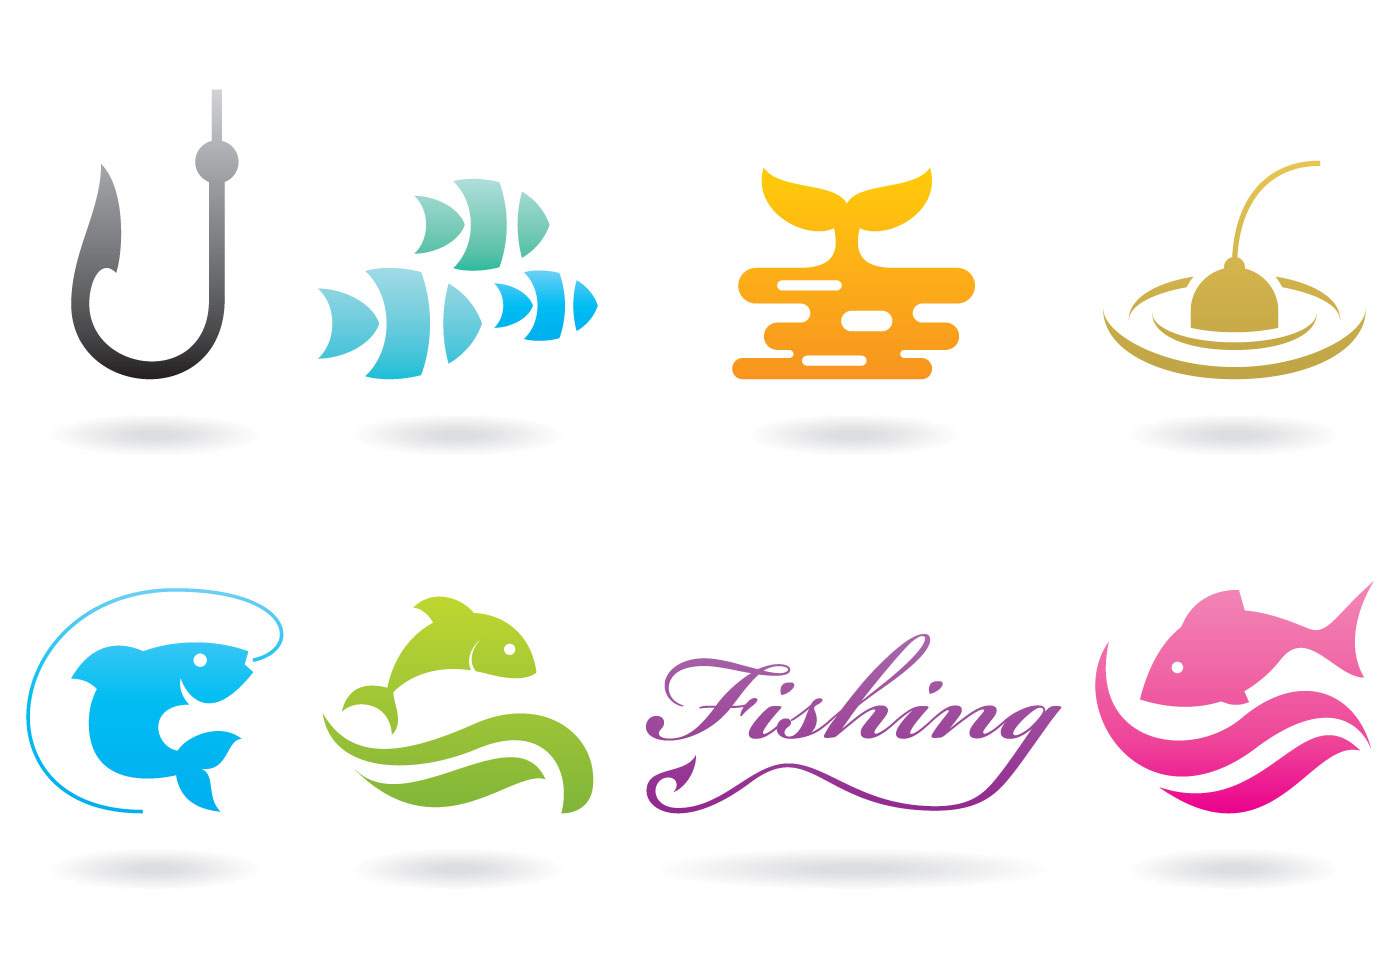 Download Pike Fishing Logos - Download Free Vectors, Clipart ...